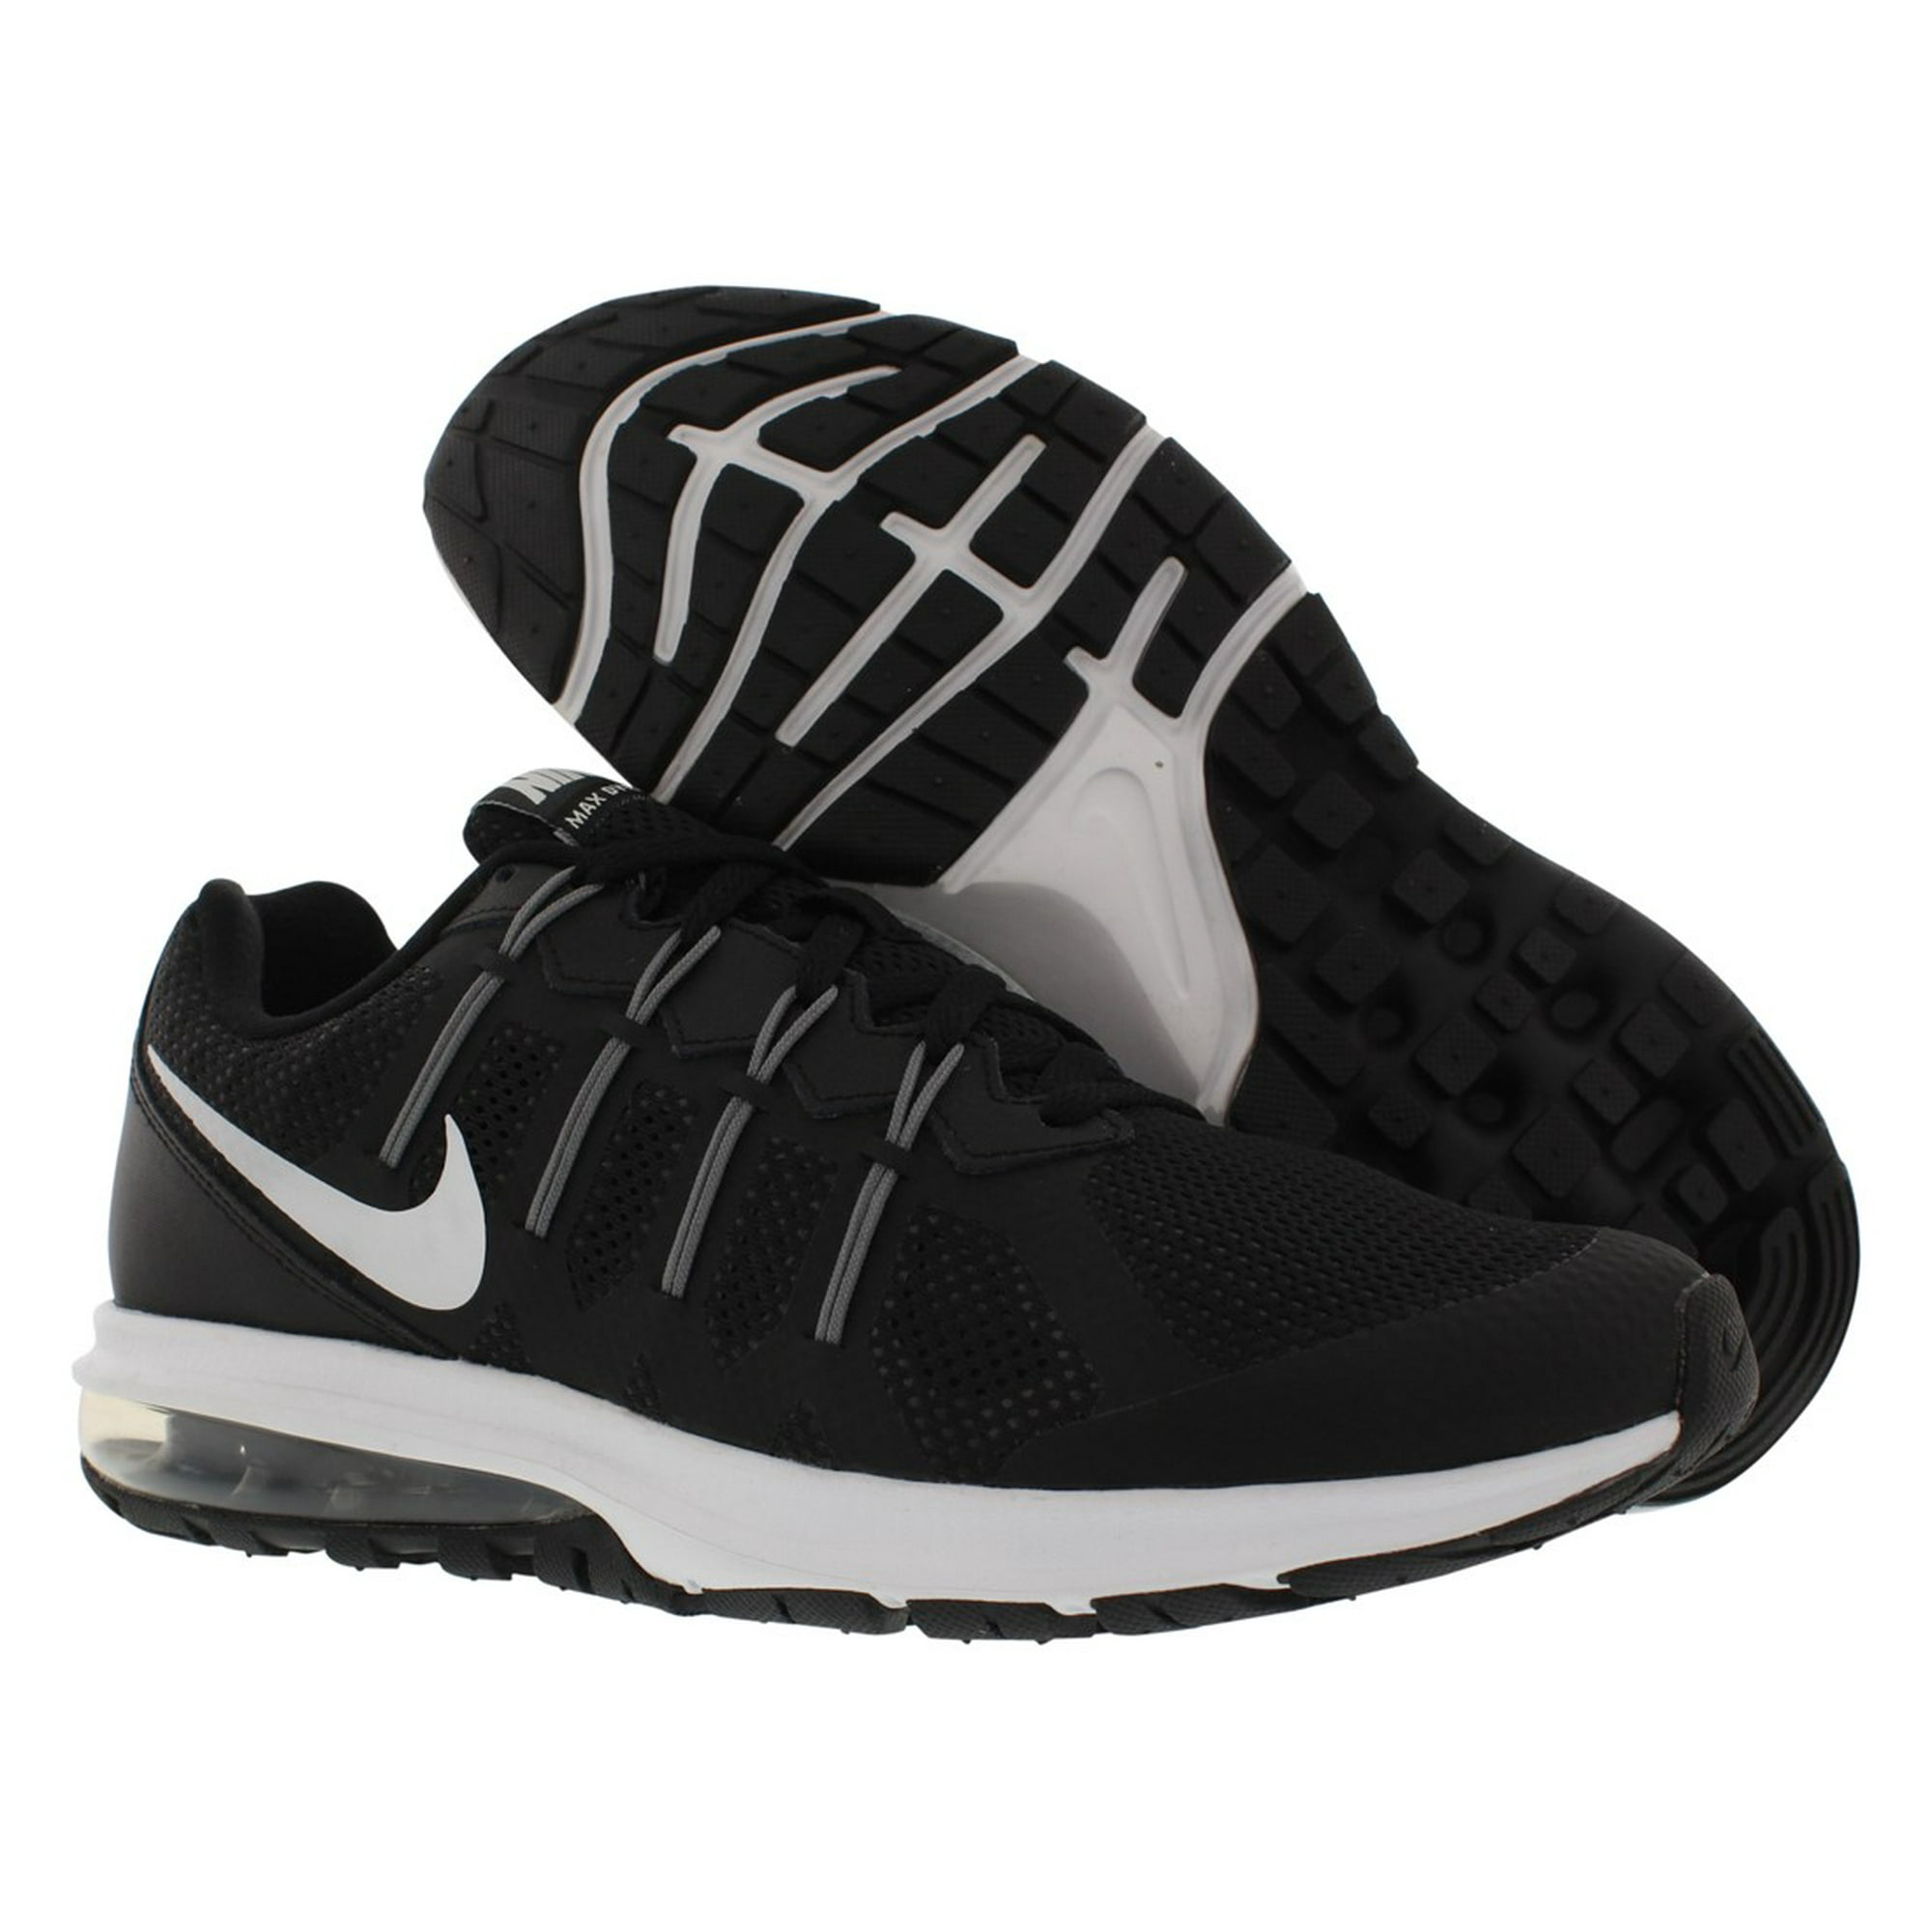 Nike Men's Sneakers - Grey - US 10.5